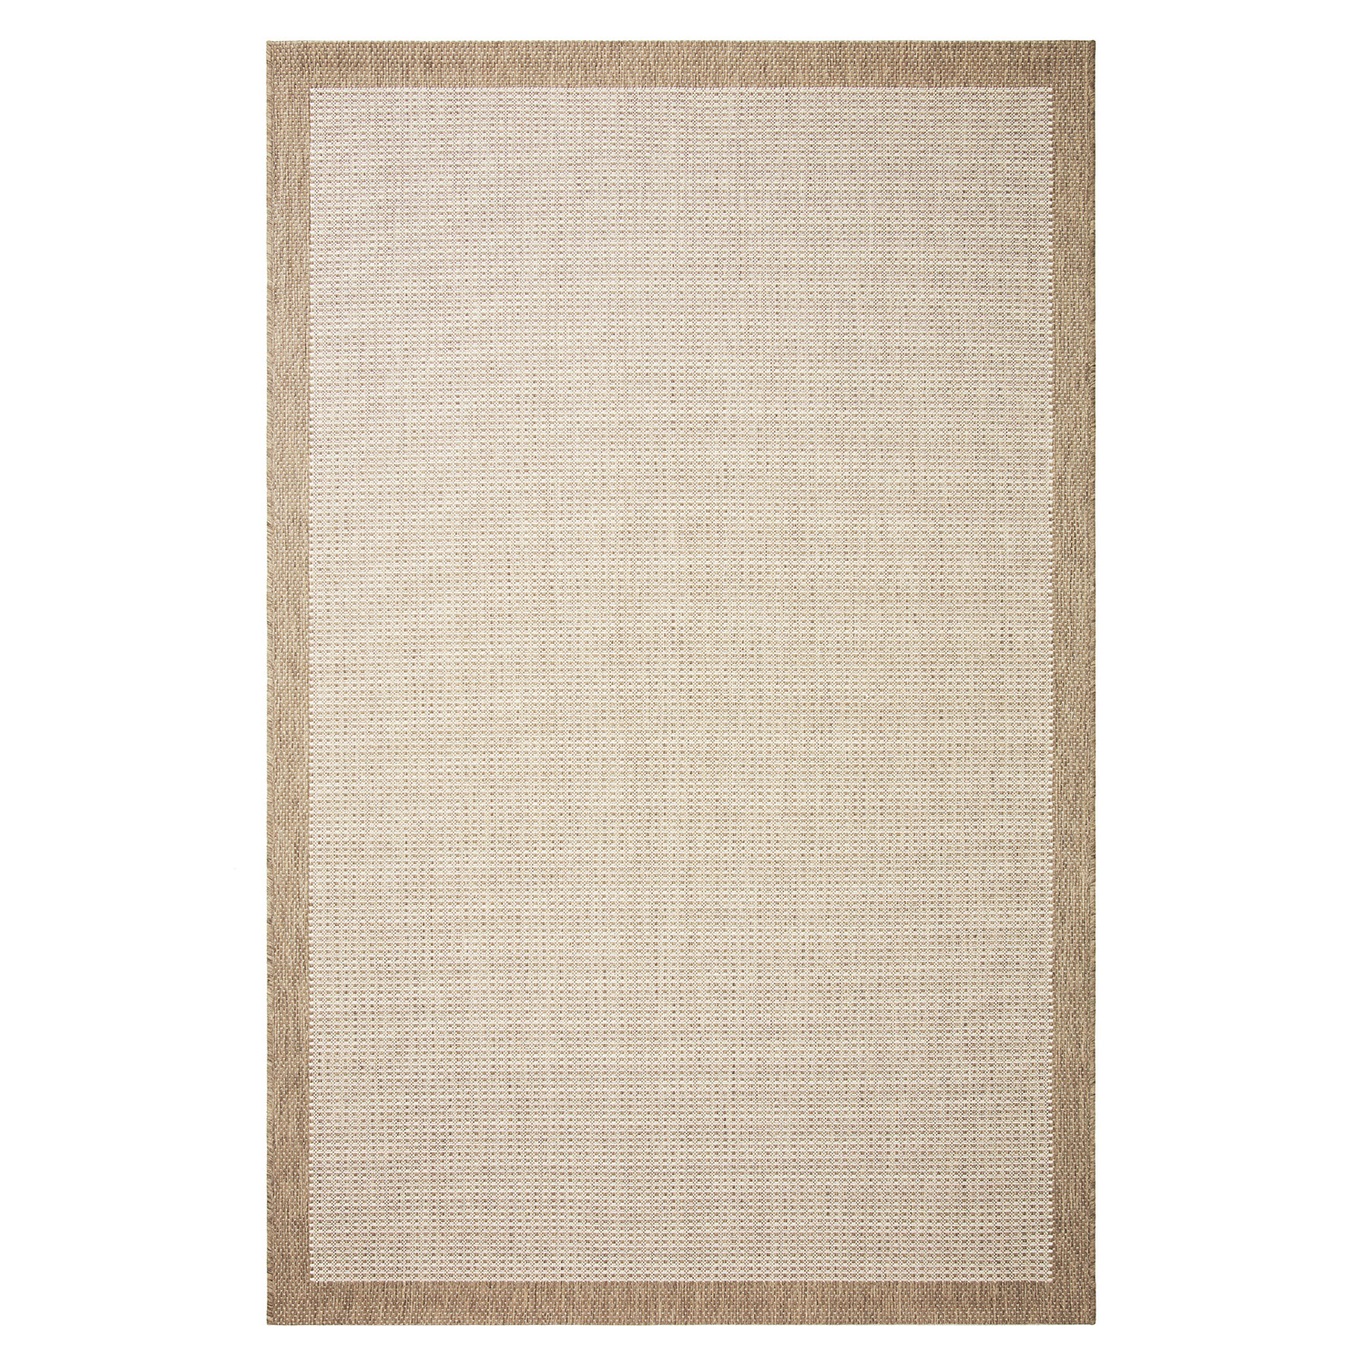 Bahar Utomhusmatta Beige/Off-white, 170x240 cm